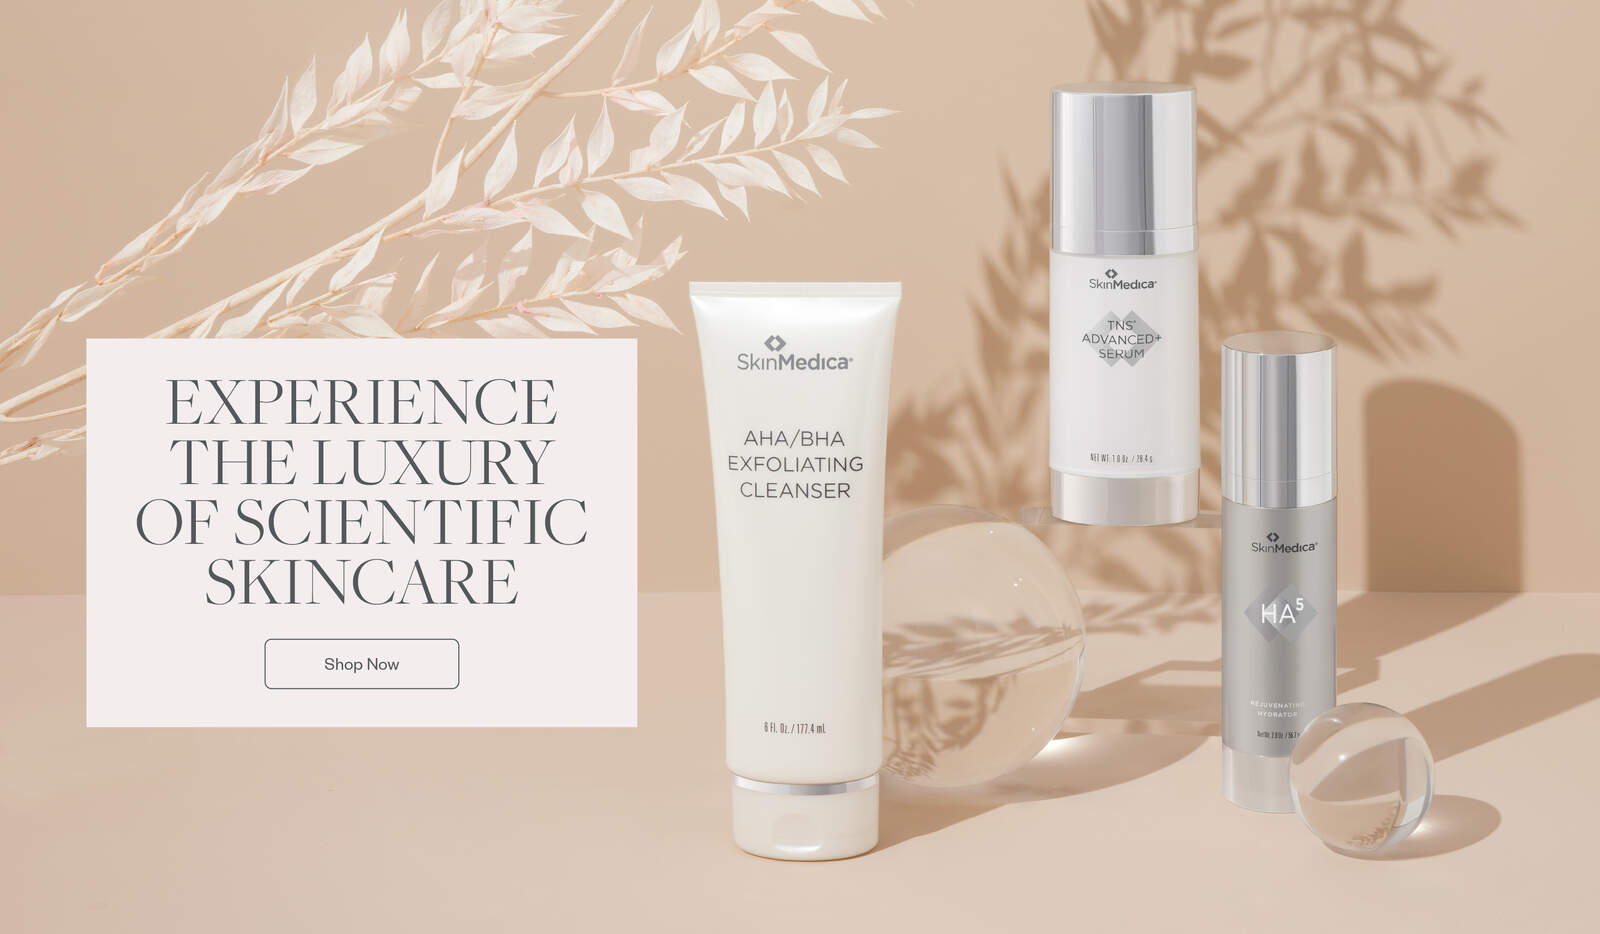 Experience the luxury of scientific skincare